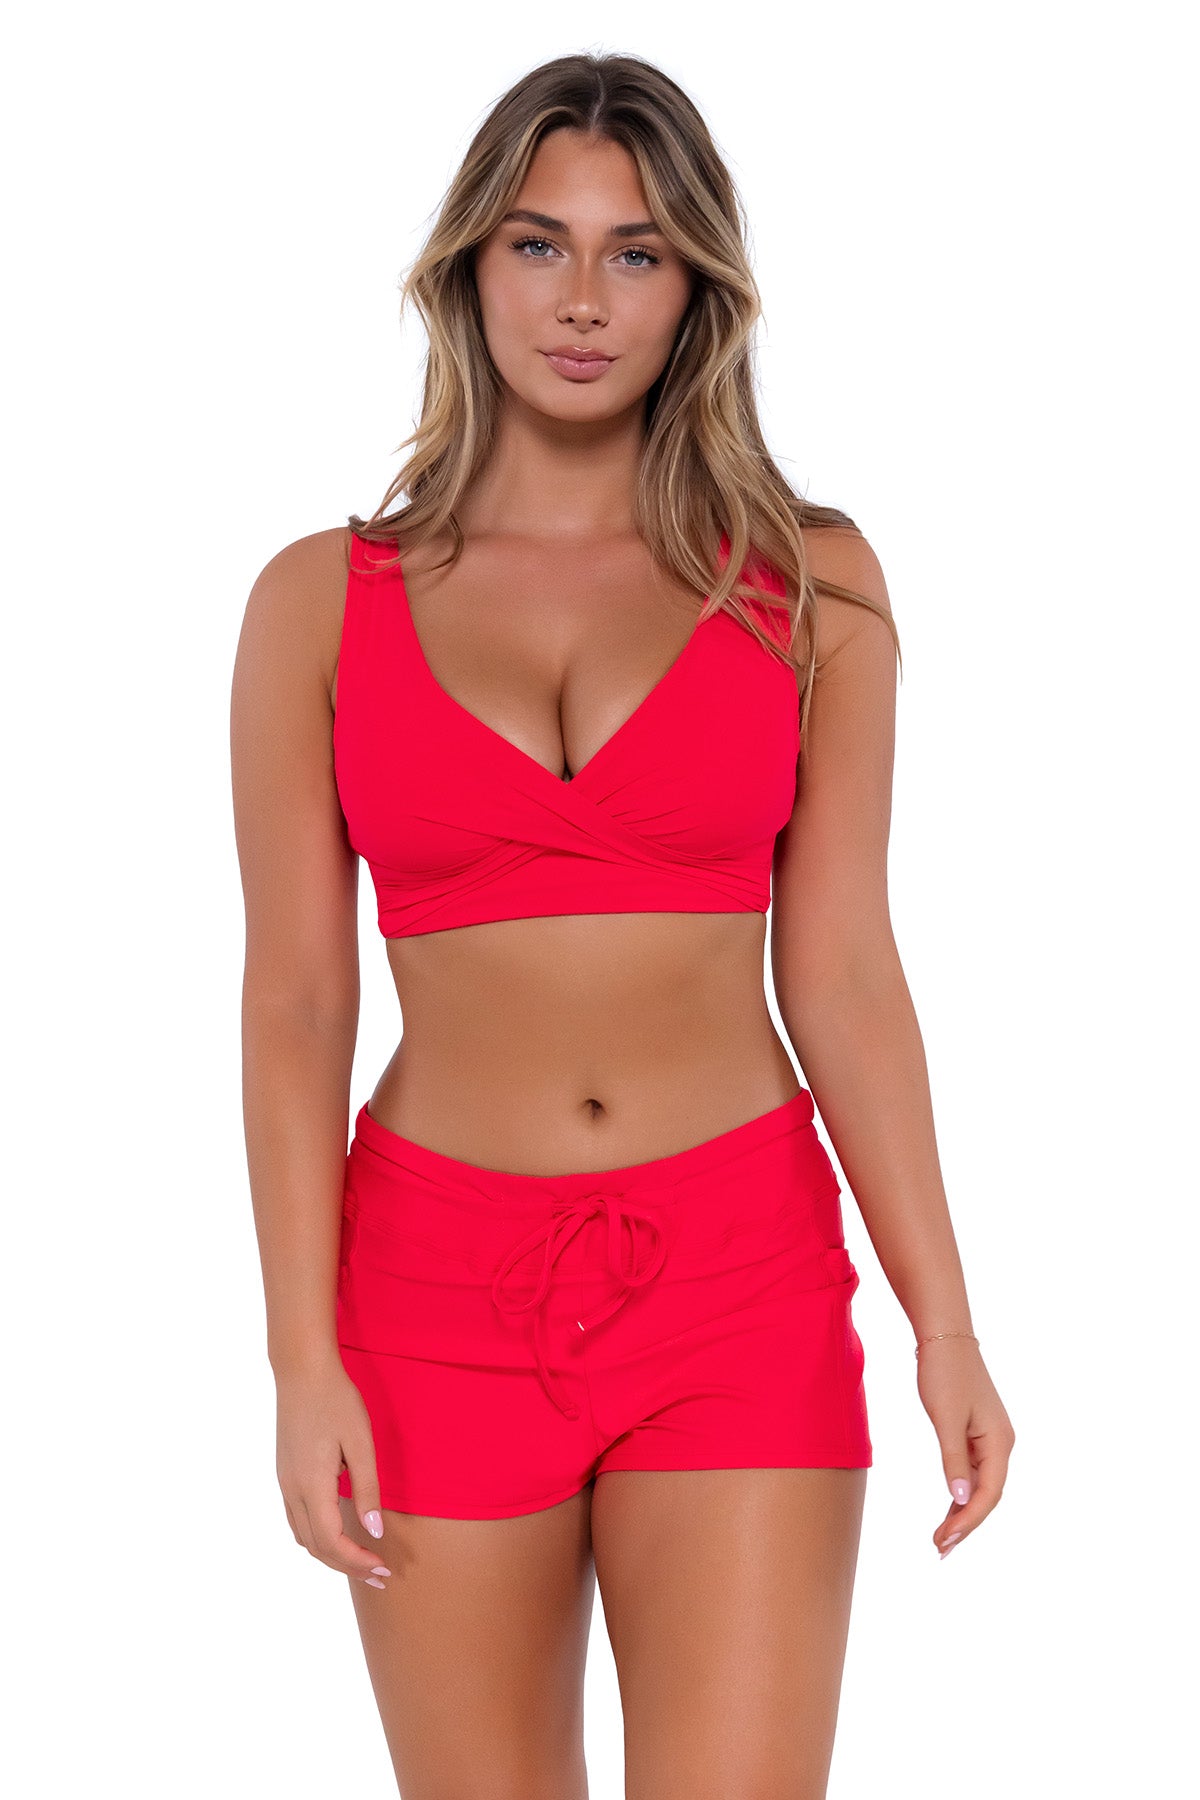 Front pose #1 of Taylor wearing Sunsets Escape Geranium Laguna Swim Short with matching Elsie Top underwire bikini